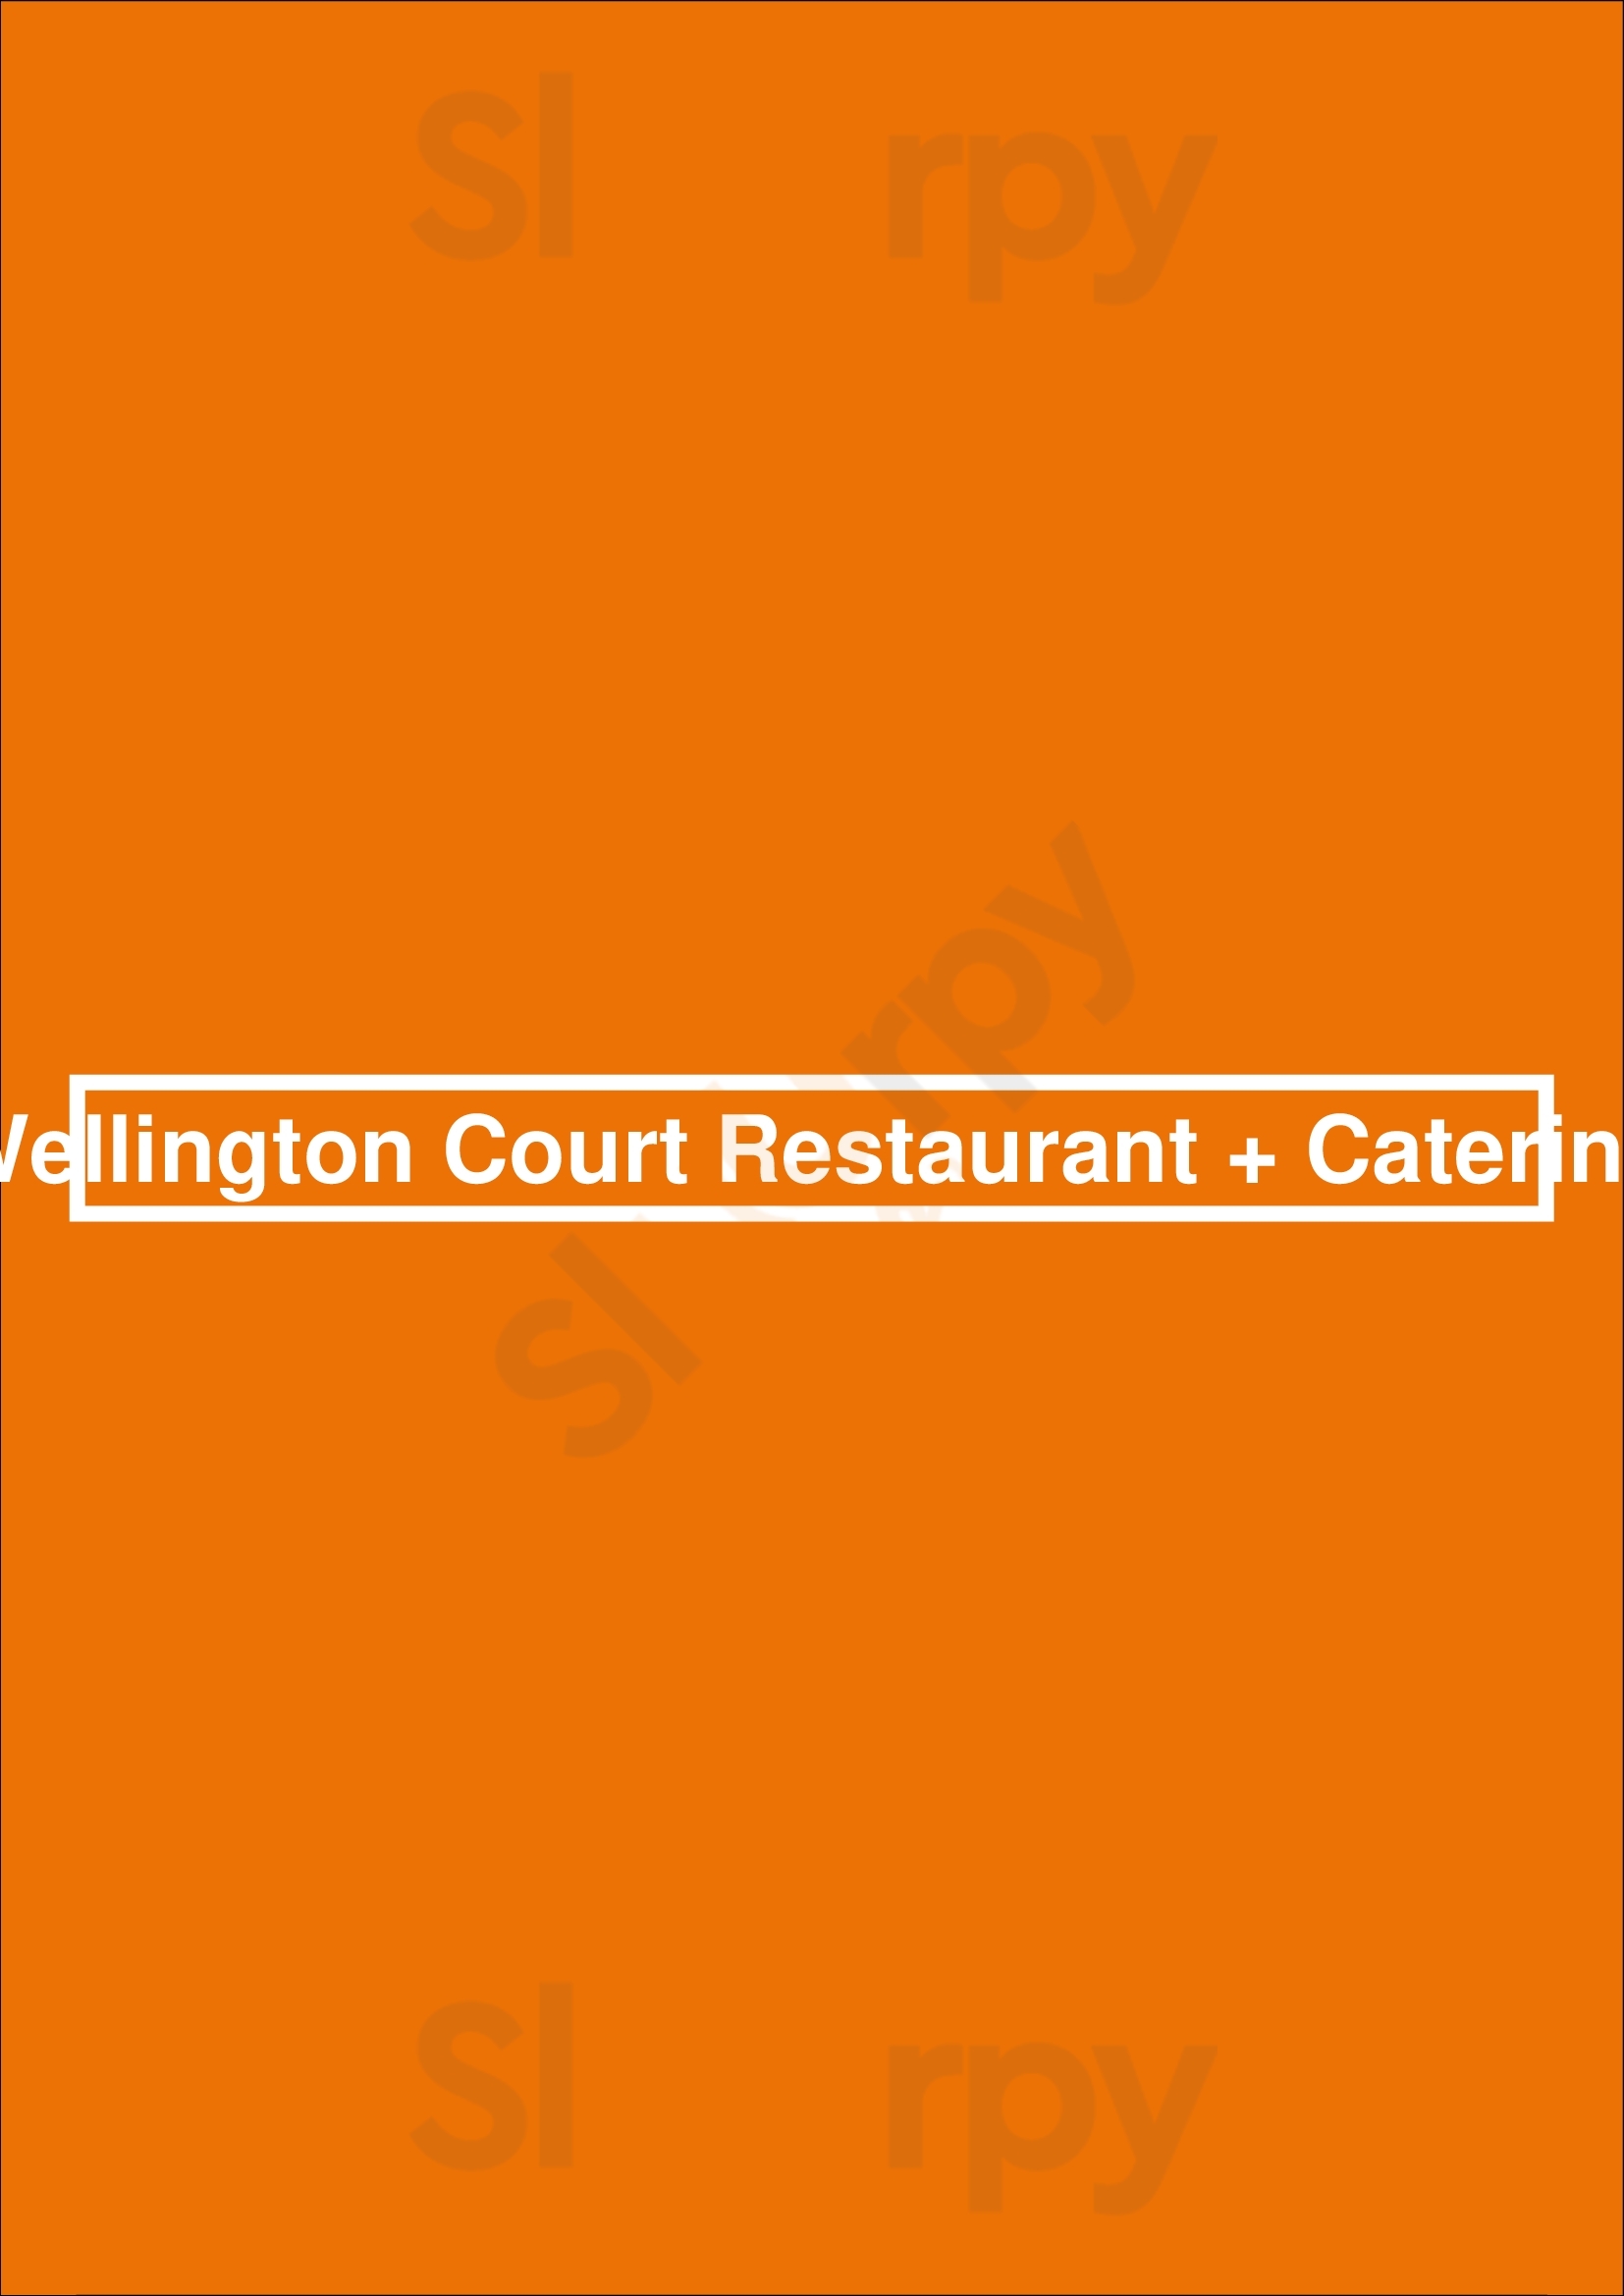 Wellington Court Restaurant + Catering St. Catharines Menu - 1